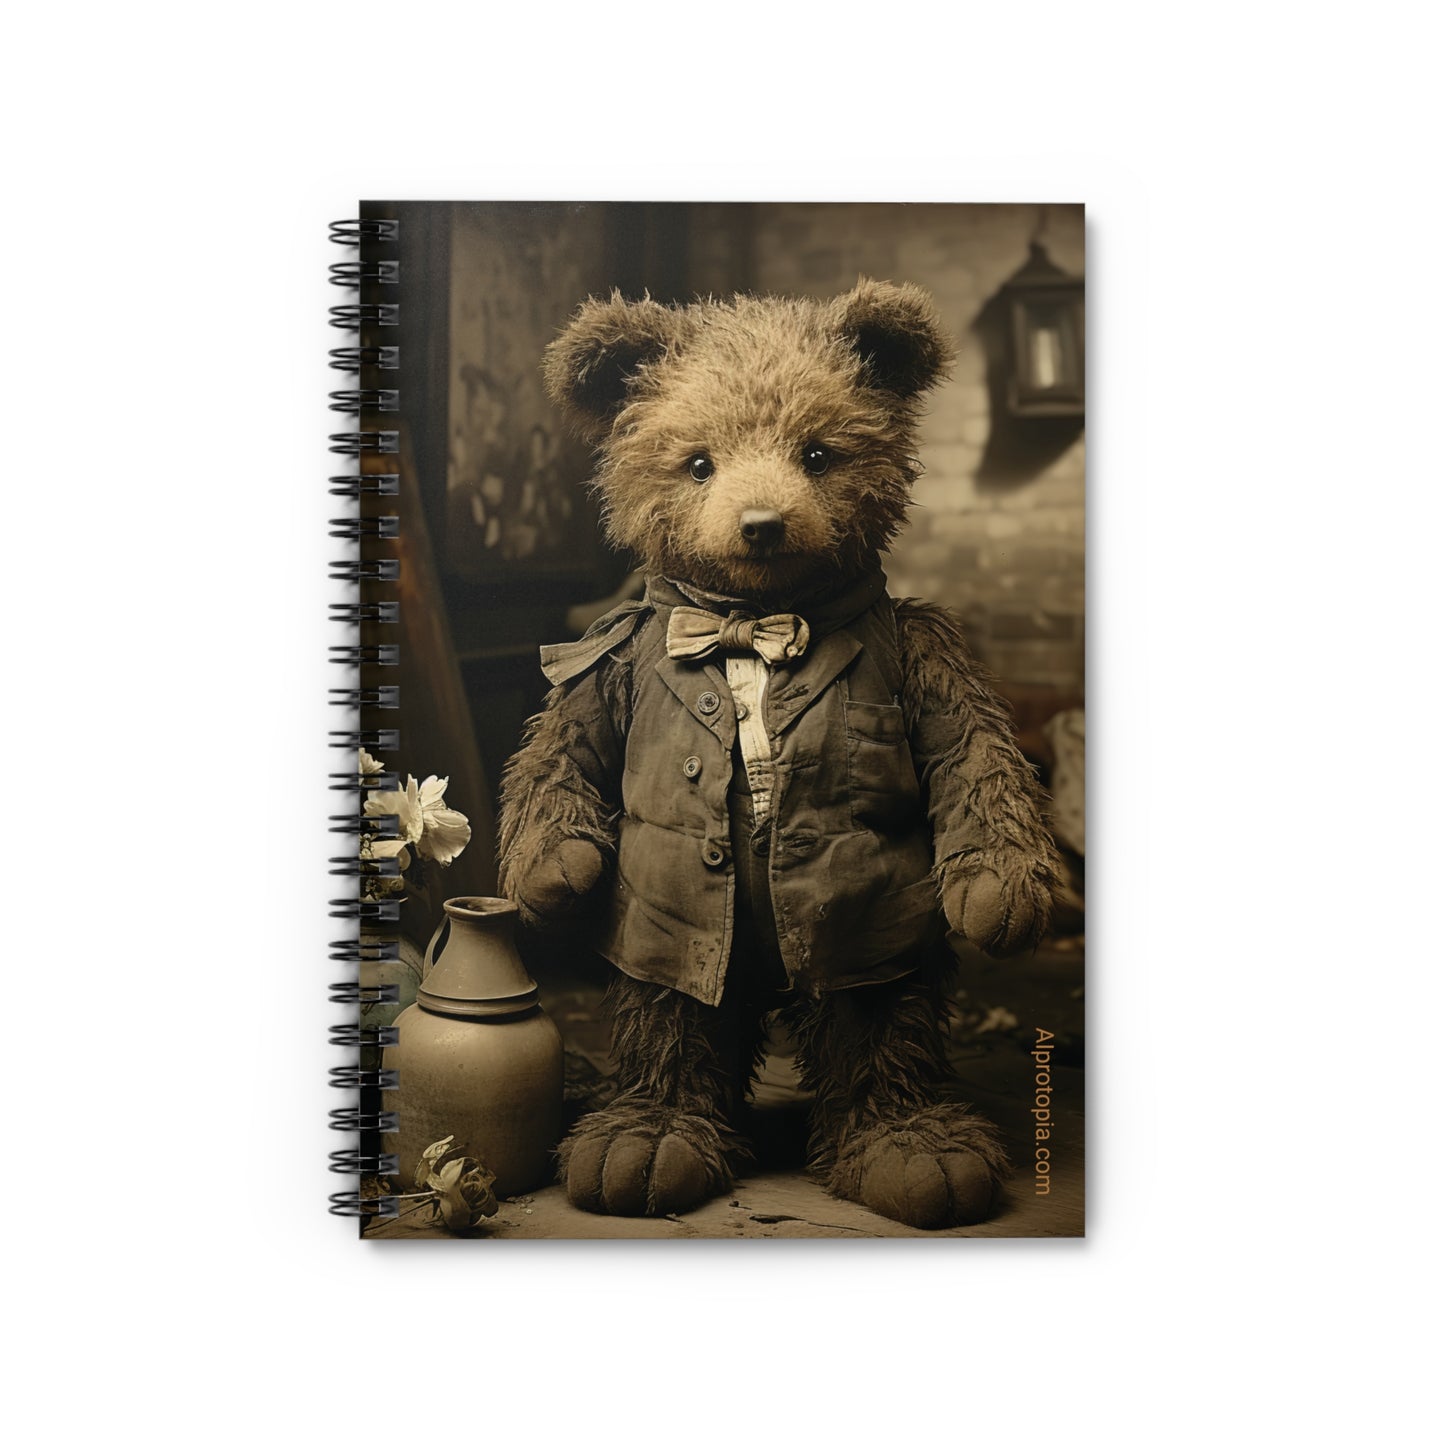 Spiral Notebook - Ruled Line. Vintage Teddy Bear